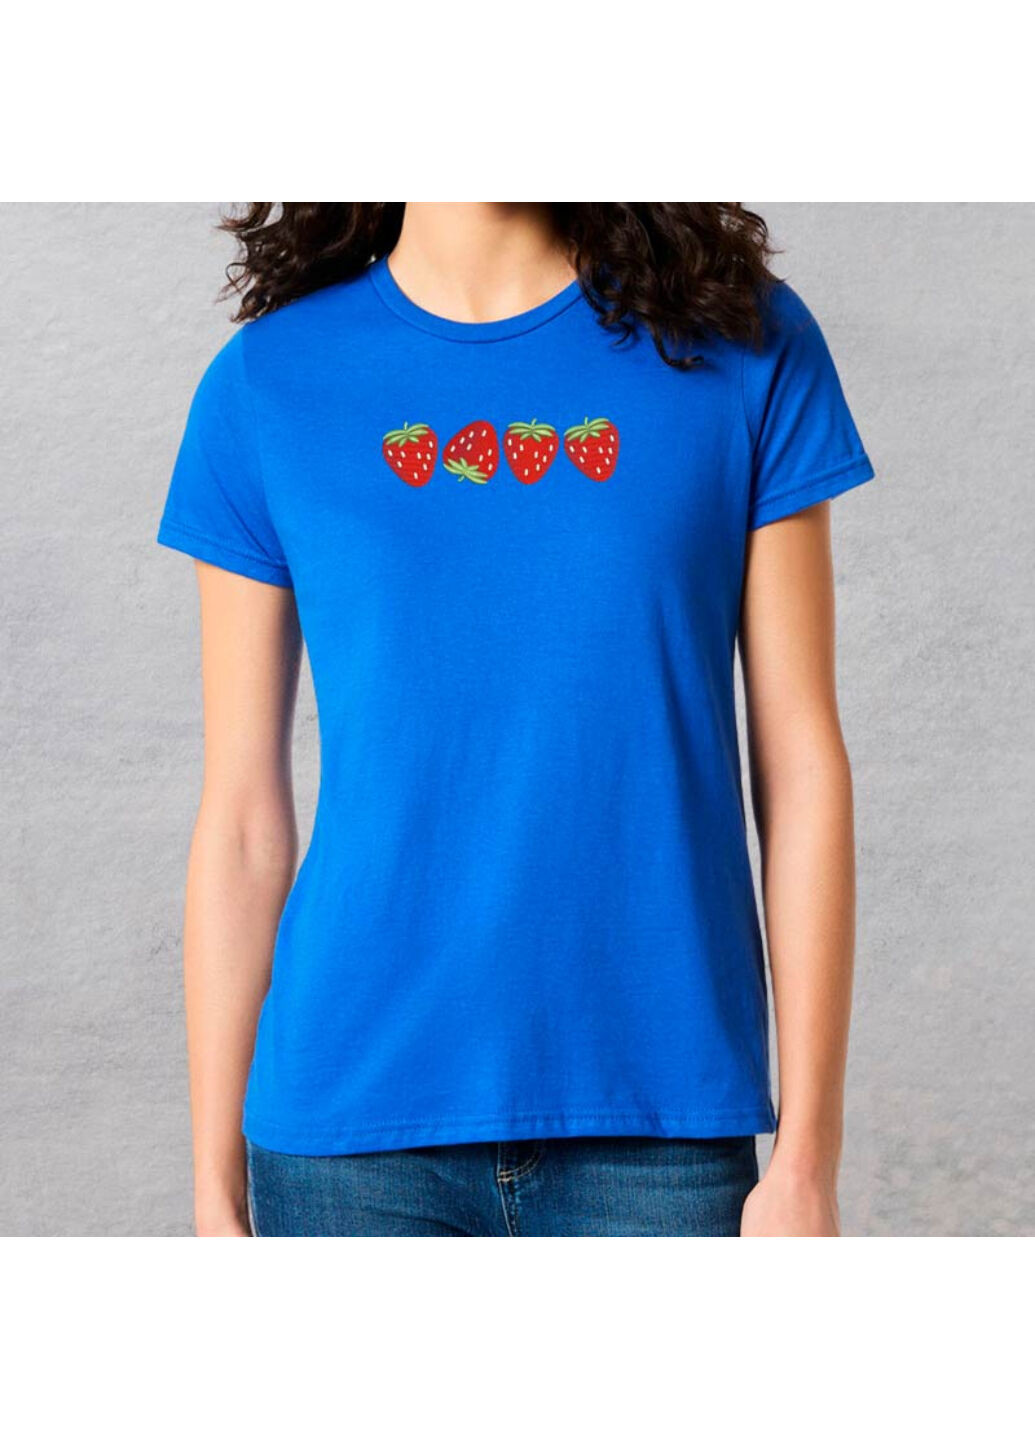 Синяя футболка з вишивкою полуничка 02-1 женская синий 2xl No Brand